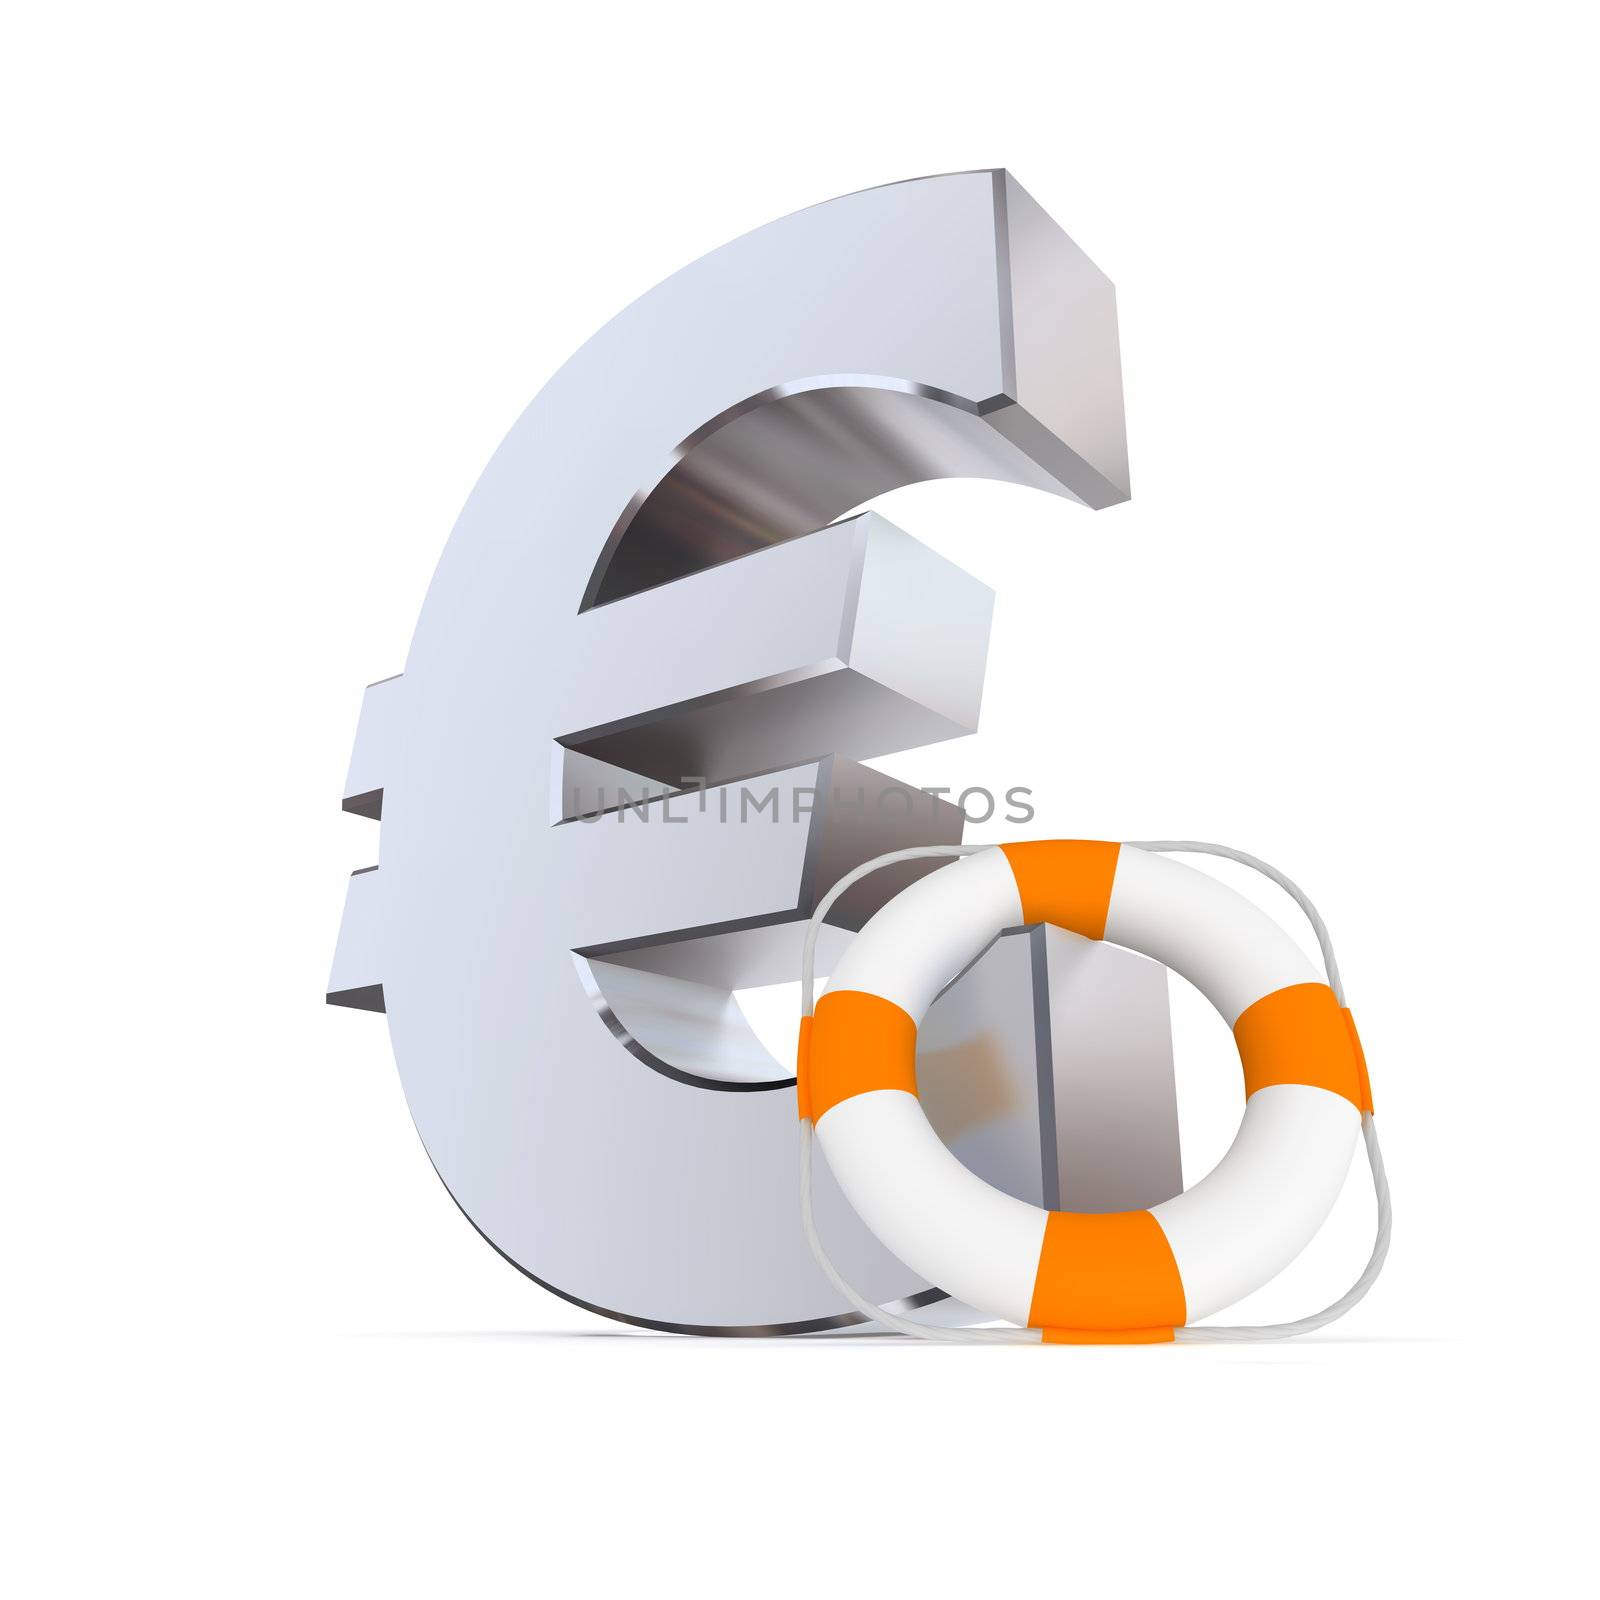 white and orange lifebelt leans on a shiny metallic Euro currency symbol